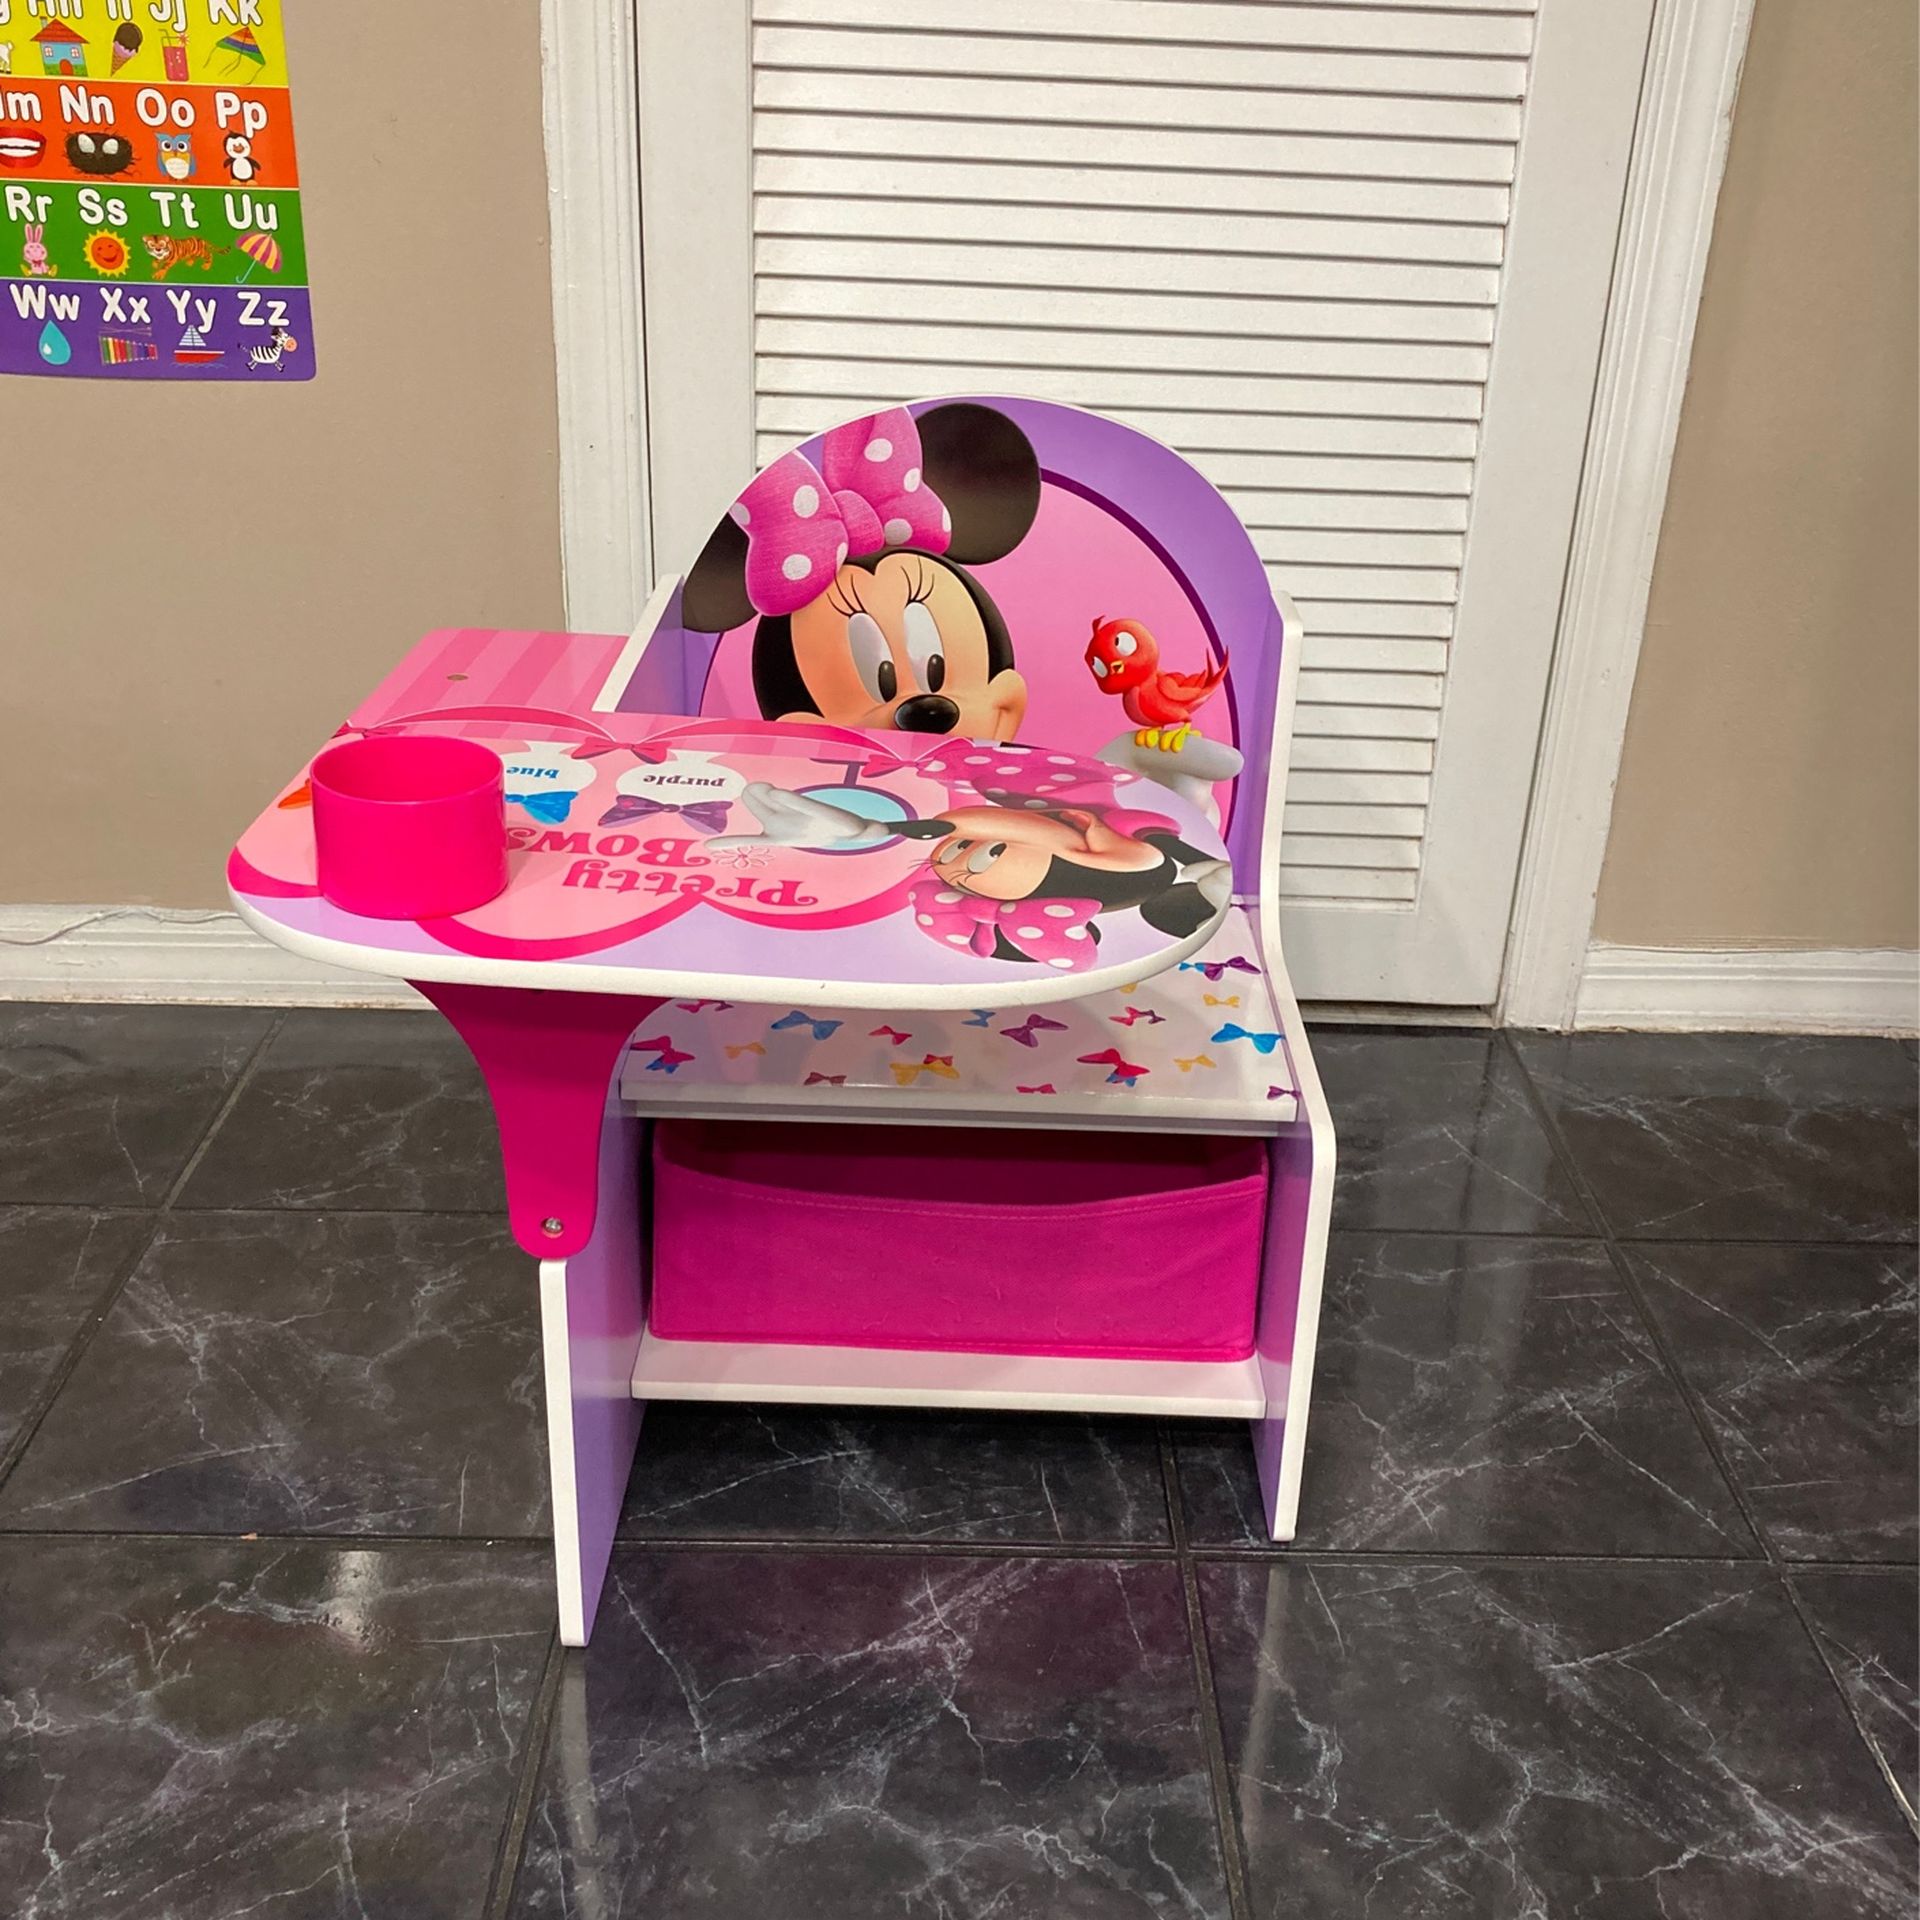 Minnie Mouse Chair Desk With Storage Bin